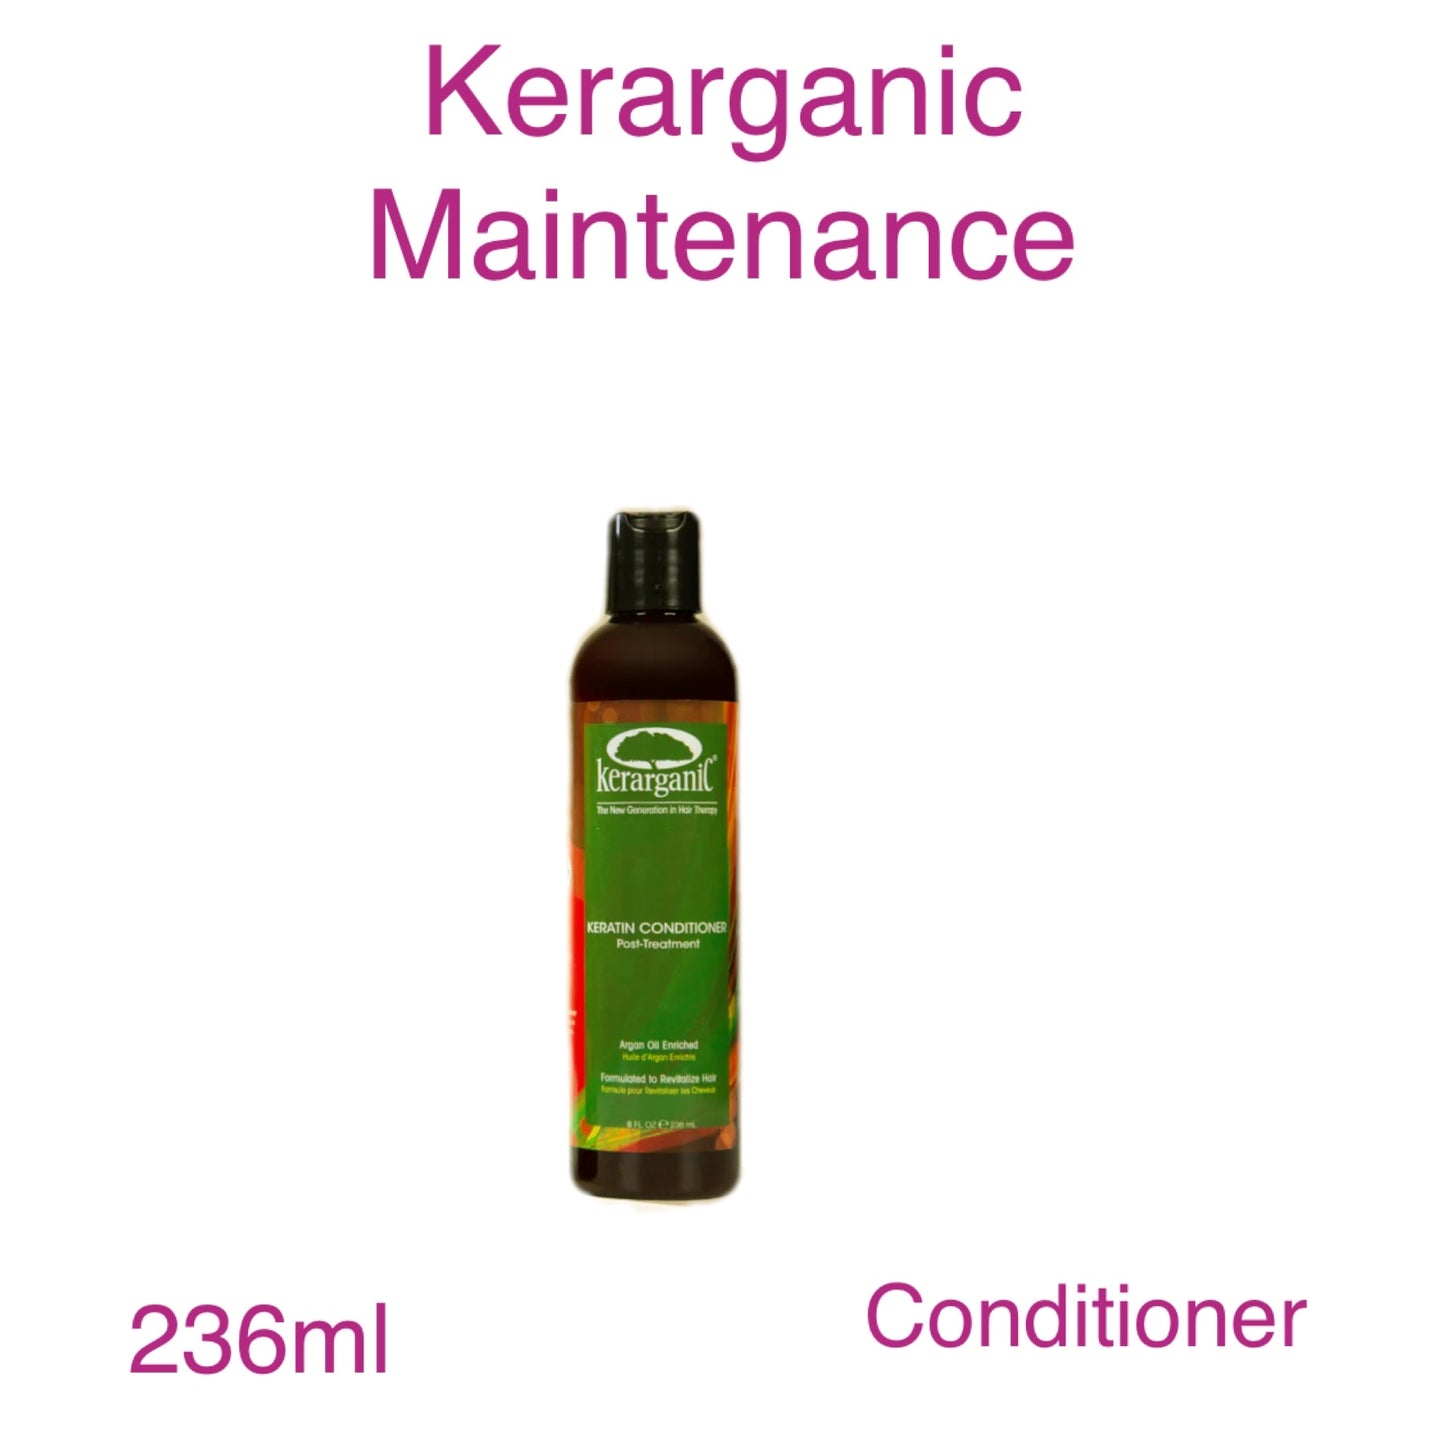 Kerarganic Keratin Maintenance Conditioner